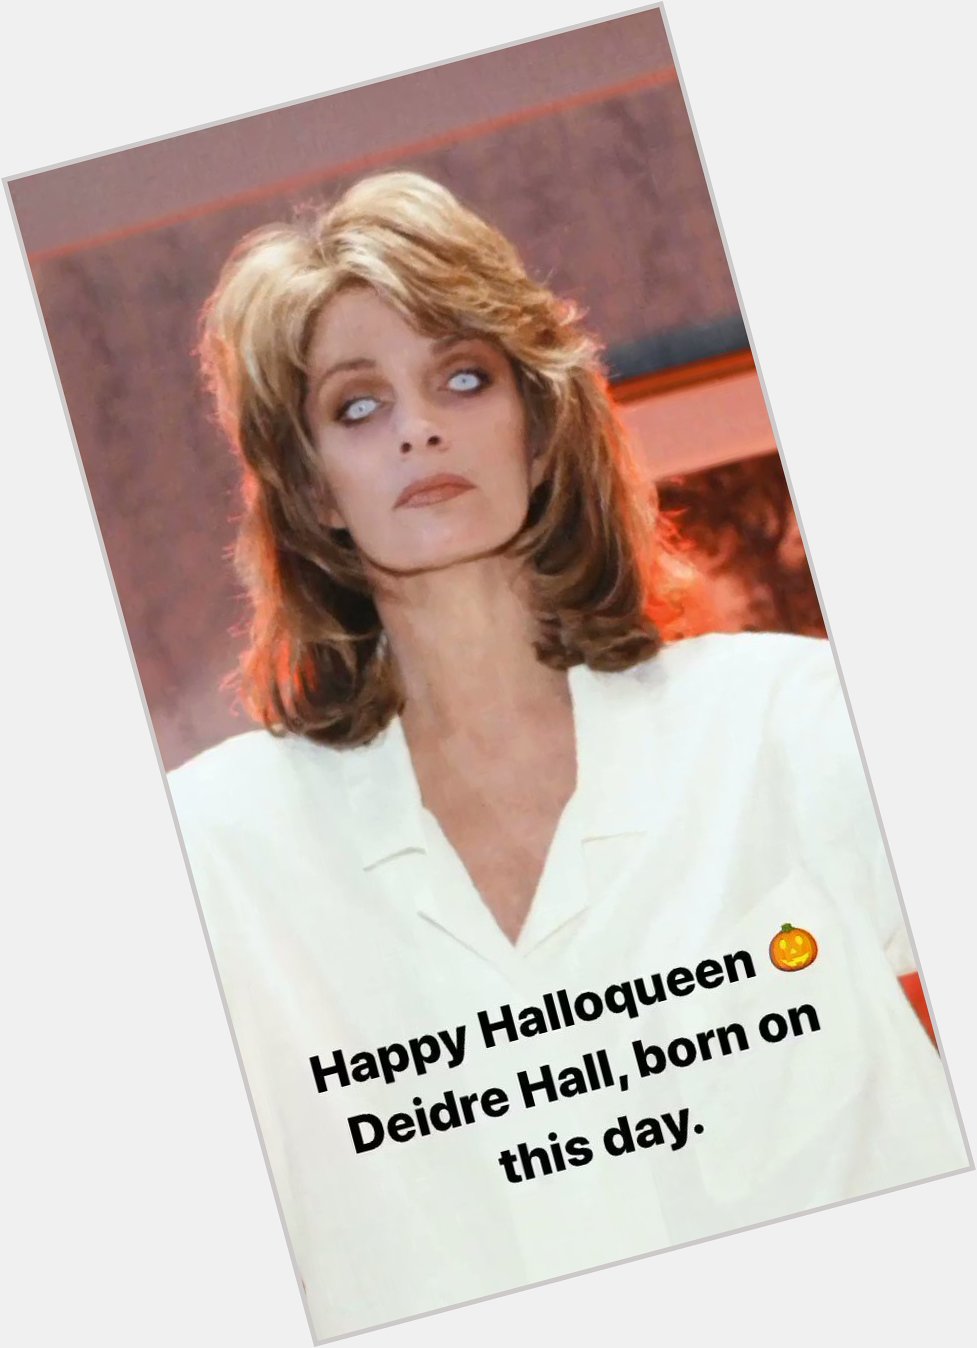 Happy Birthday (October 31) and Happy Halloween to Deidre Hall!   